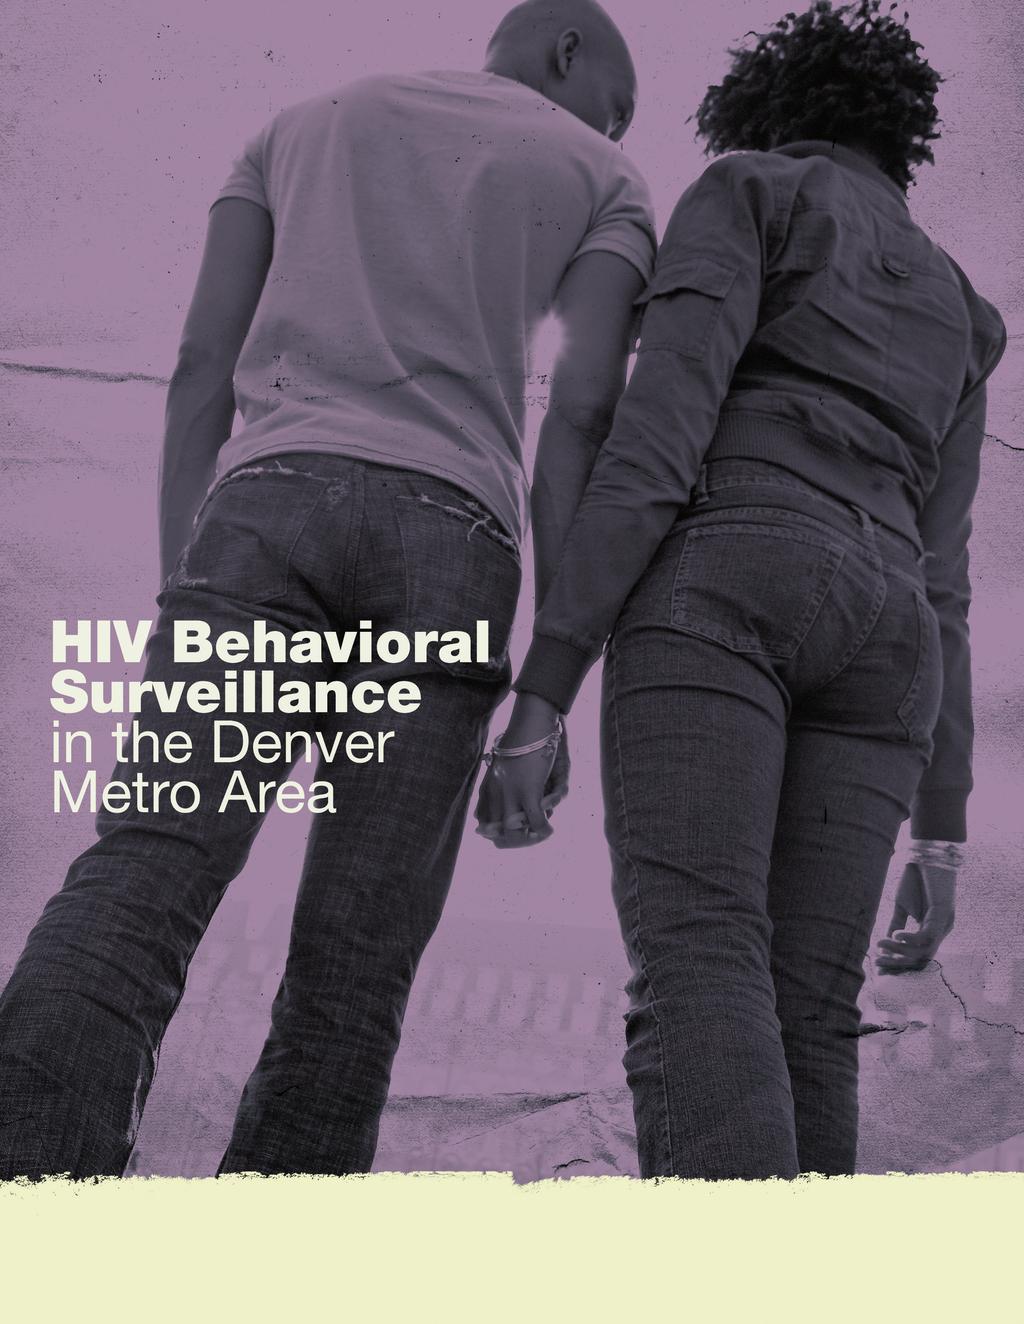 Understanding HIV Risk and Prevention Behaviors